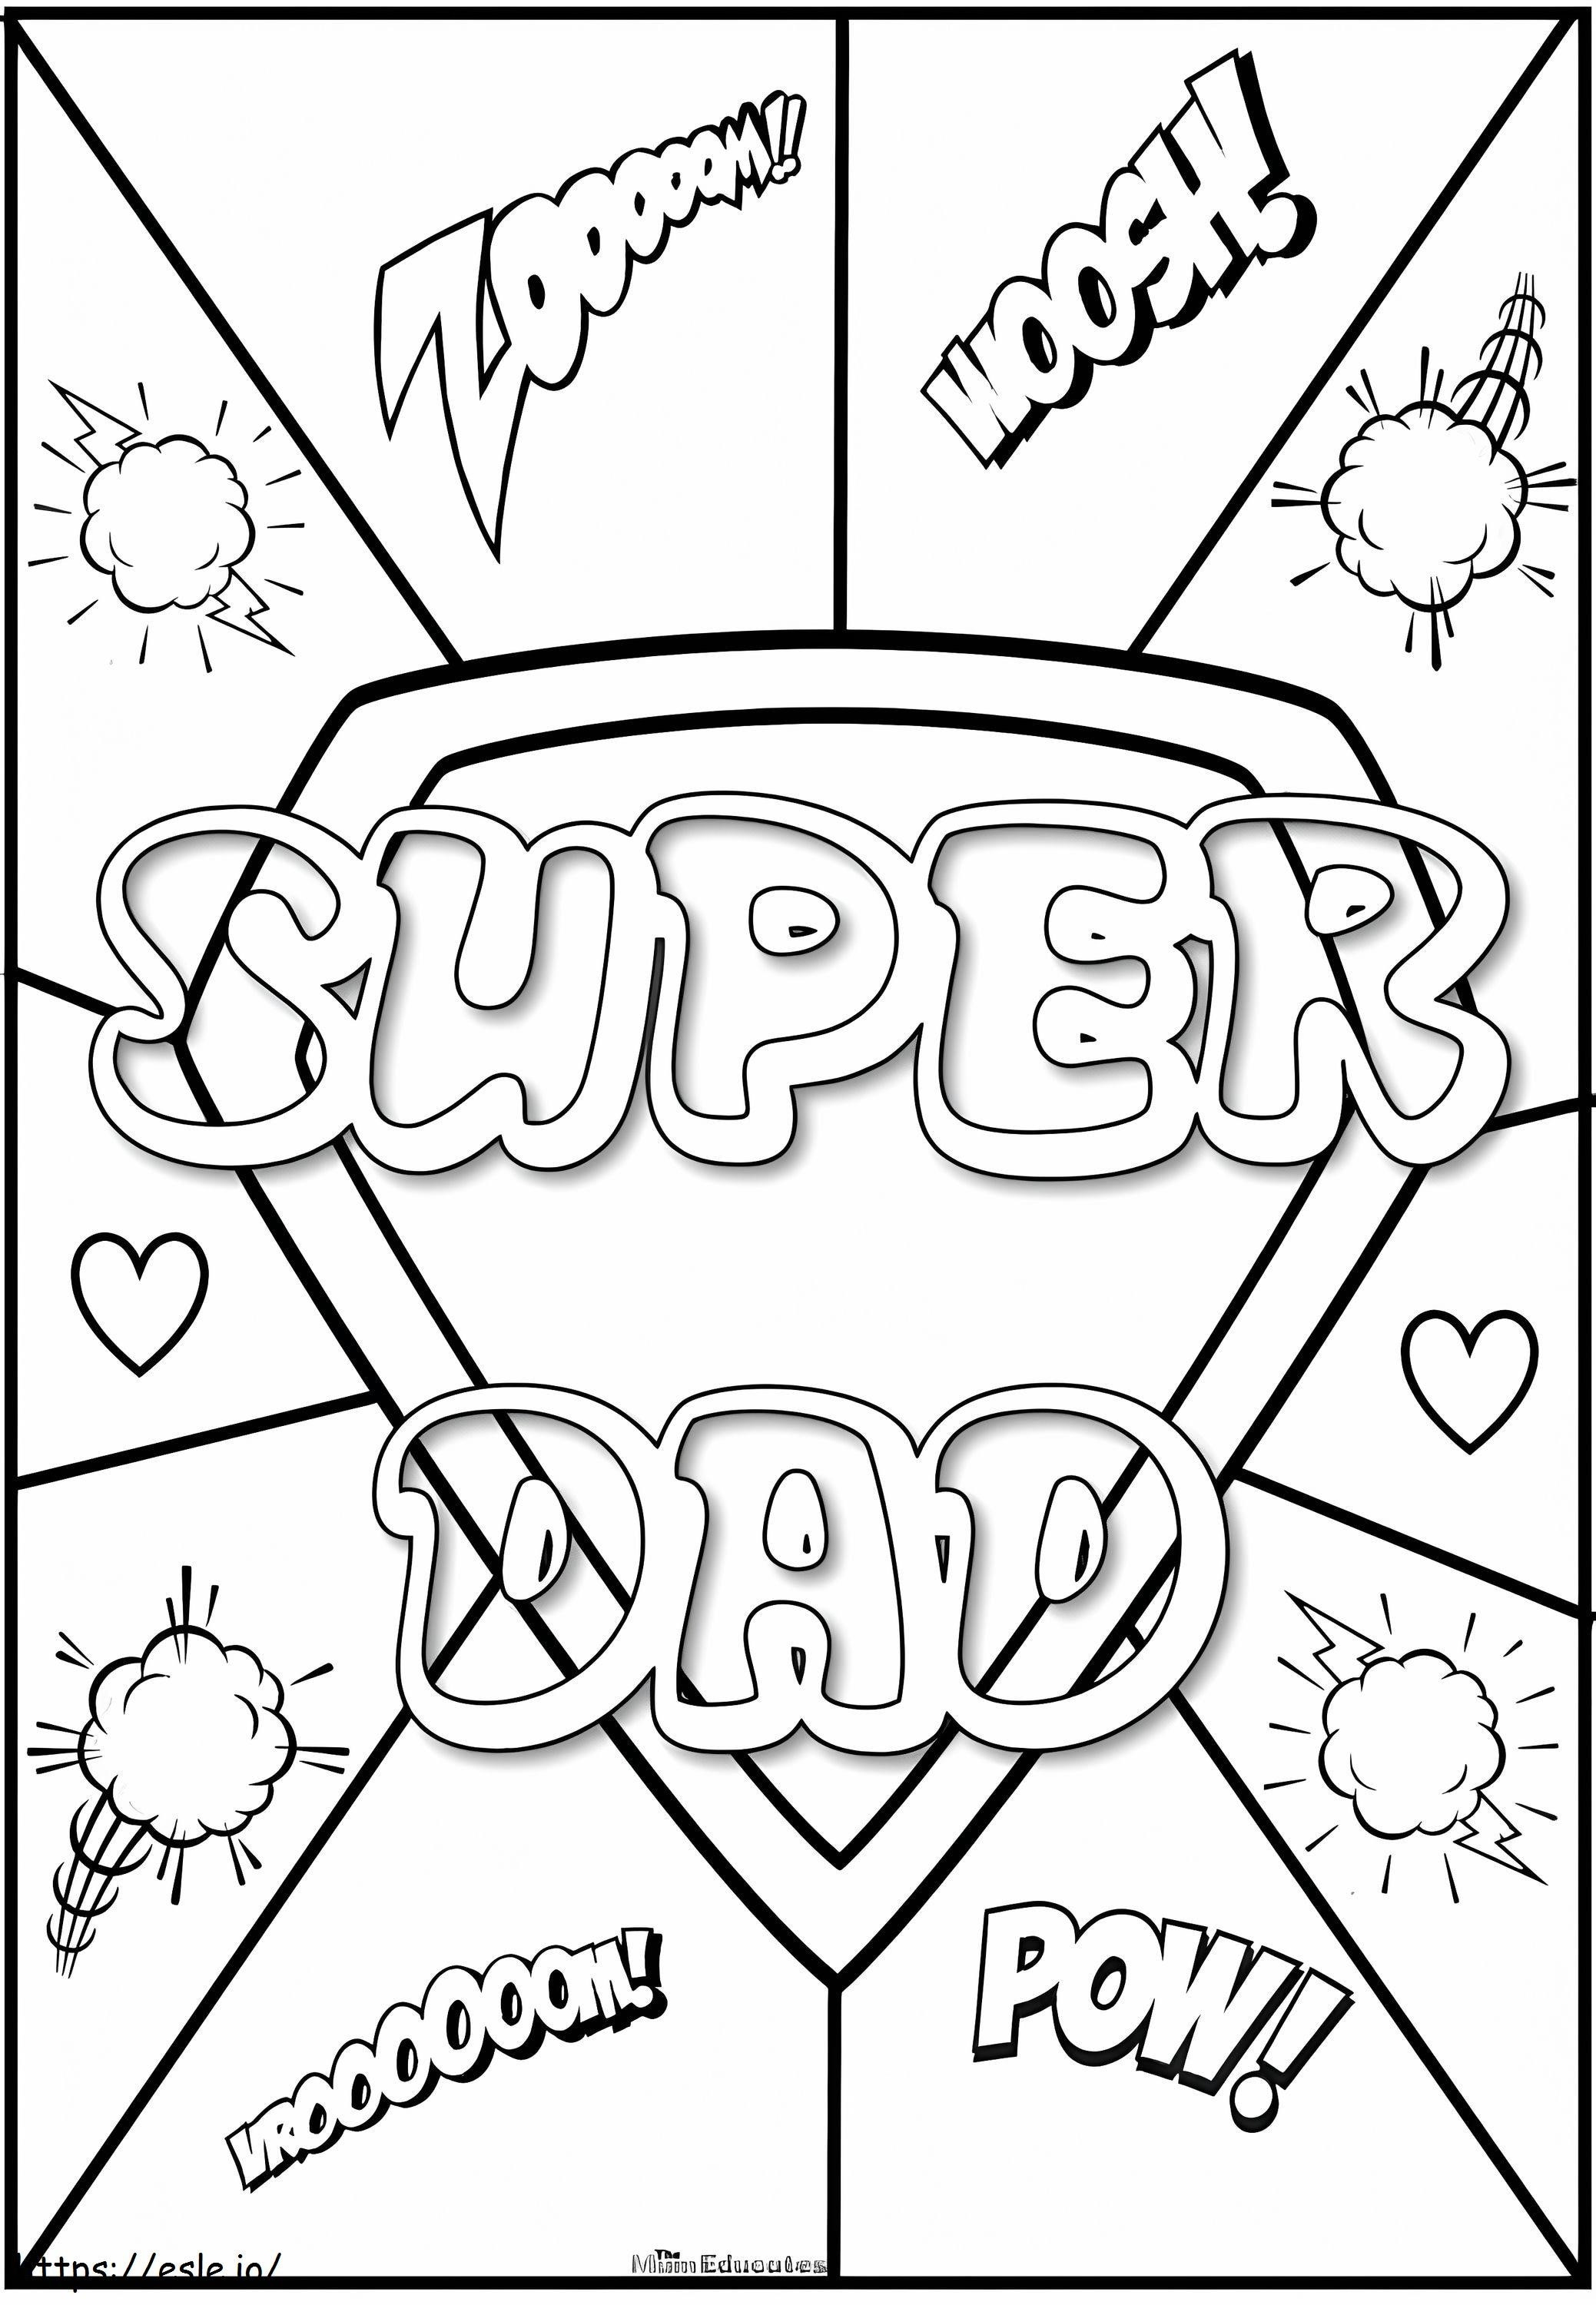 Super Dad To Color coloring page